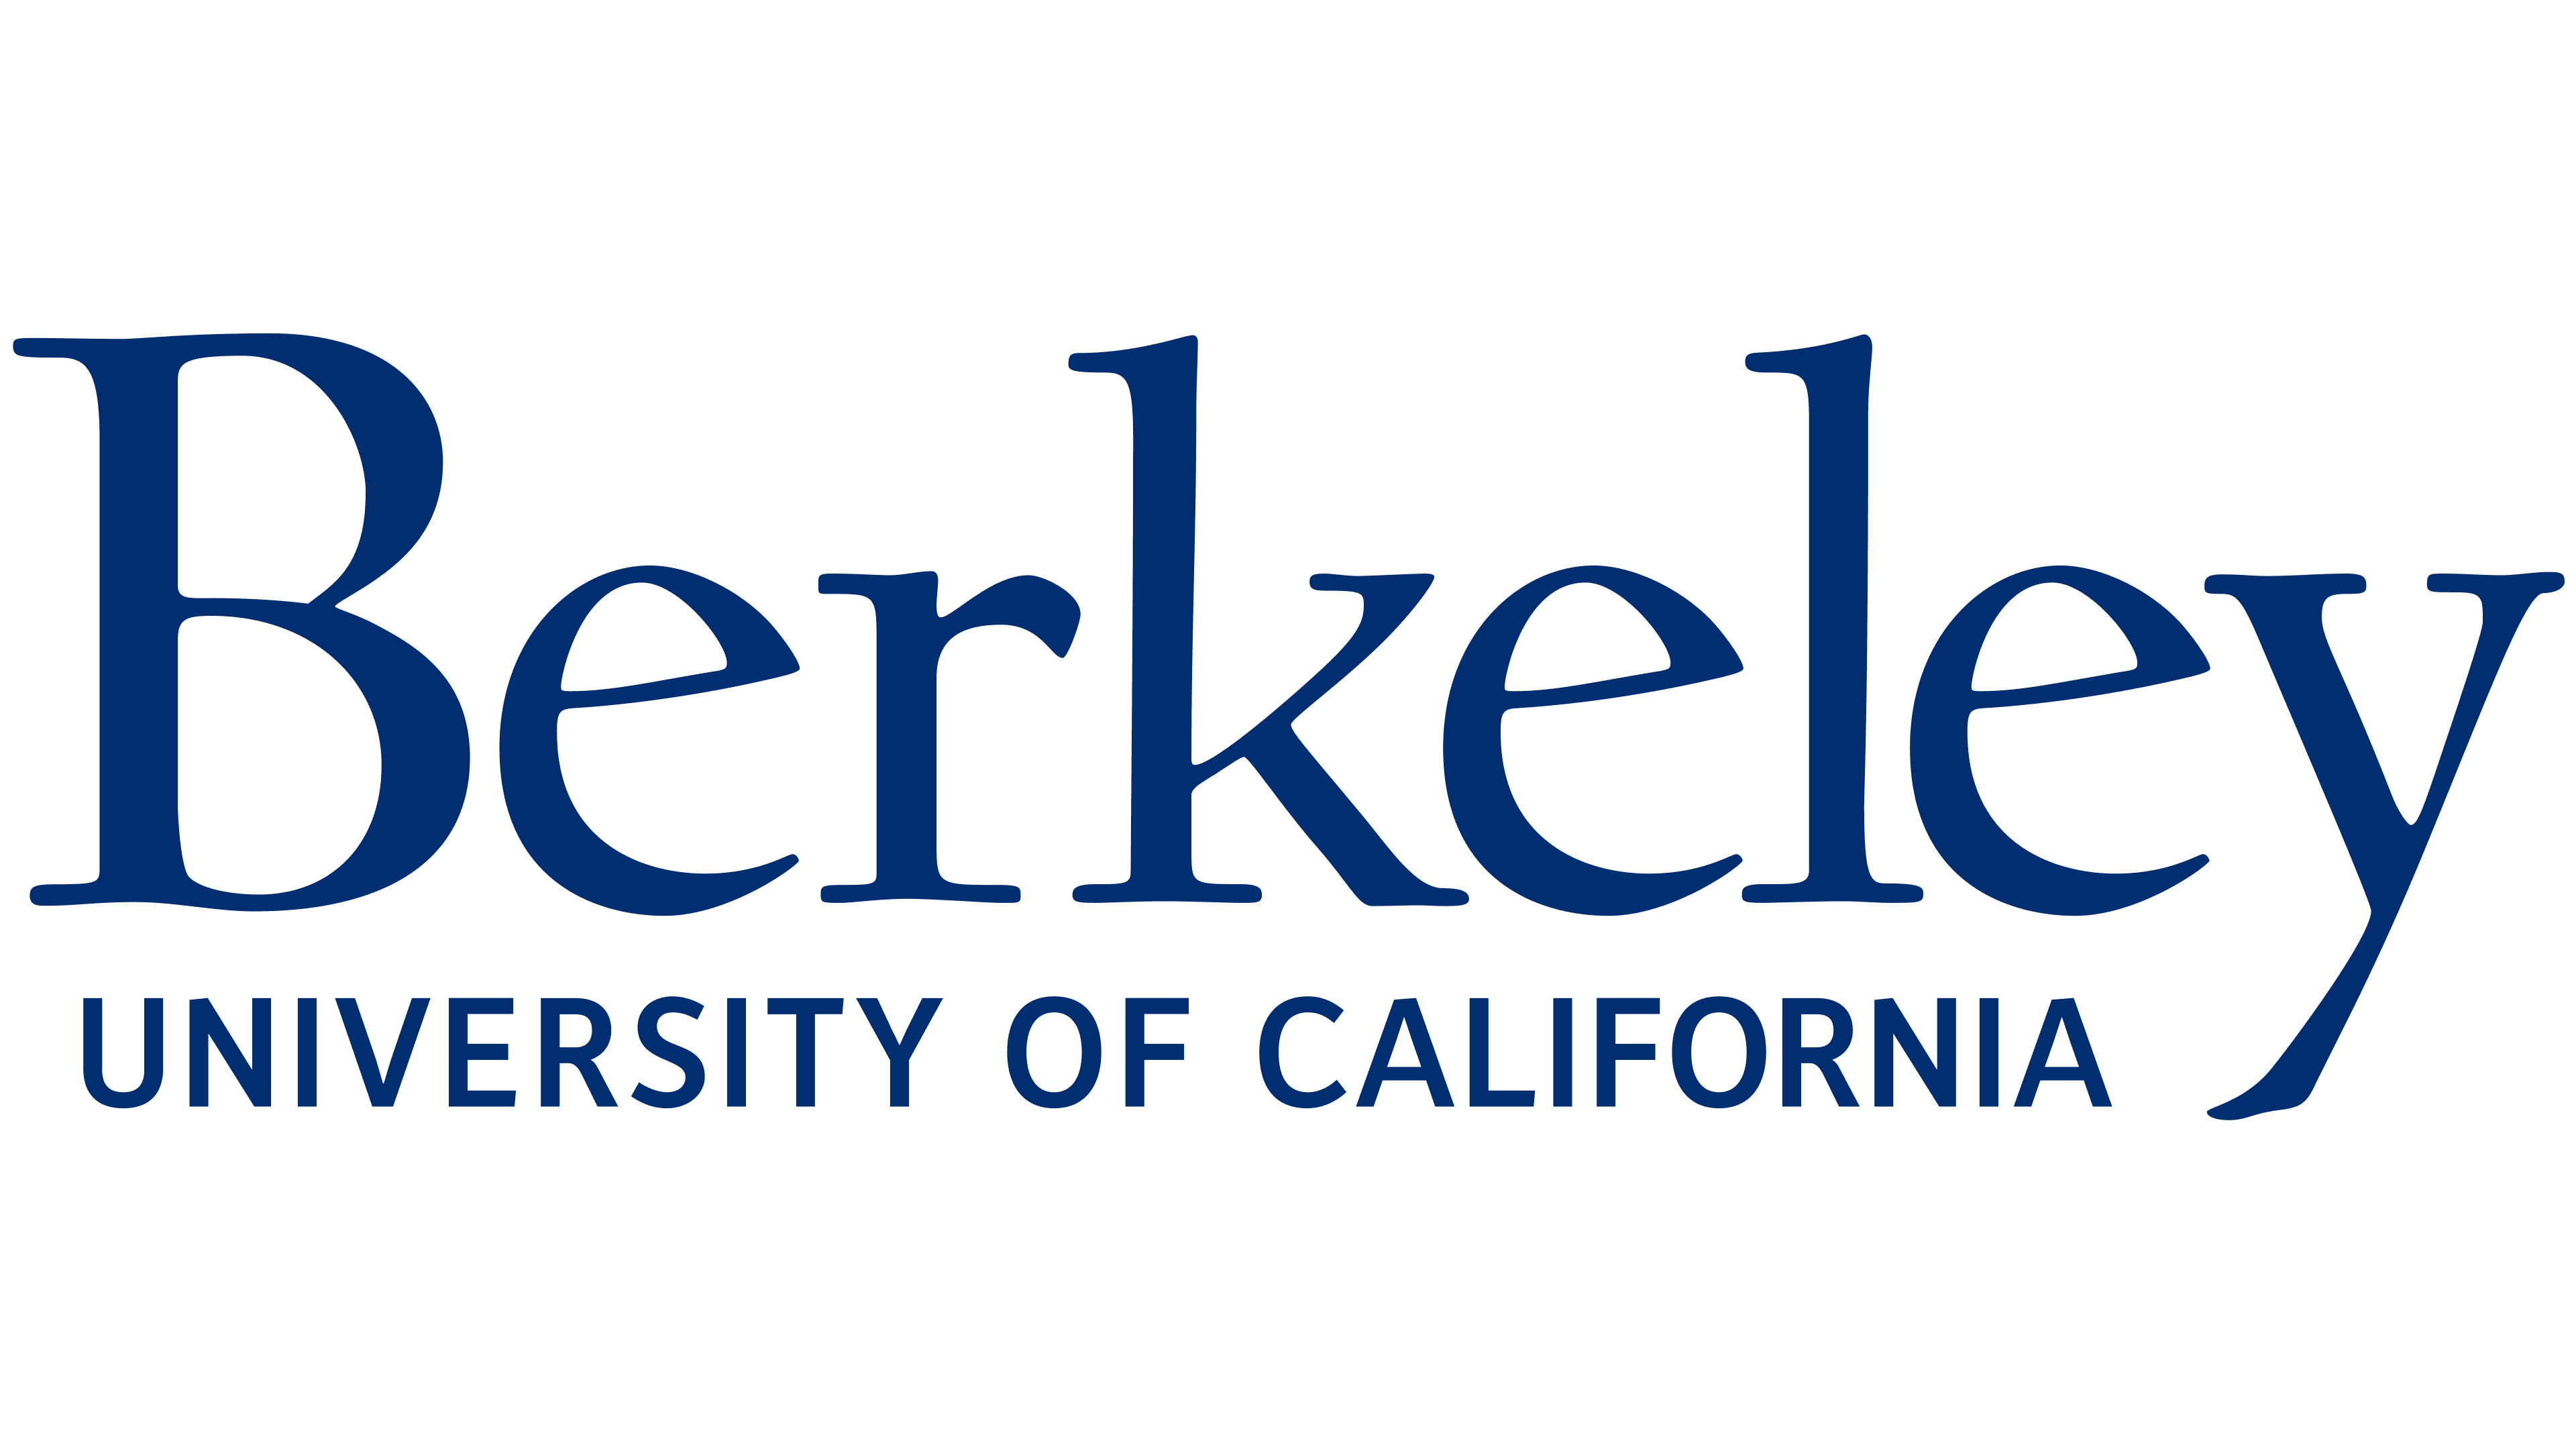 uc-berkeley-logo-histoire-signification-de-l-embl-me